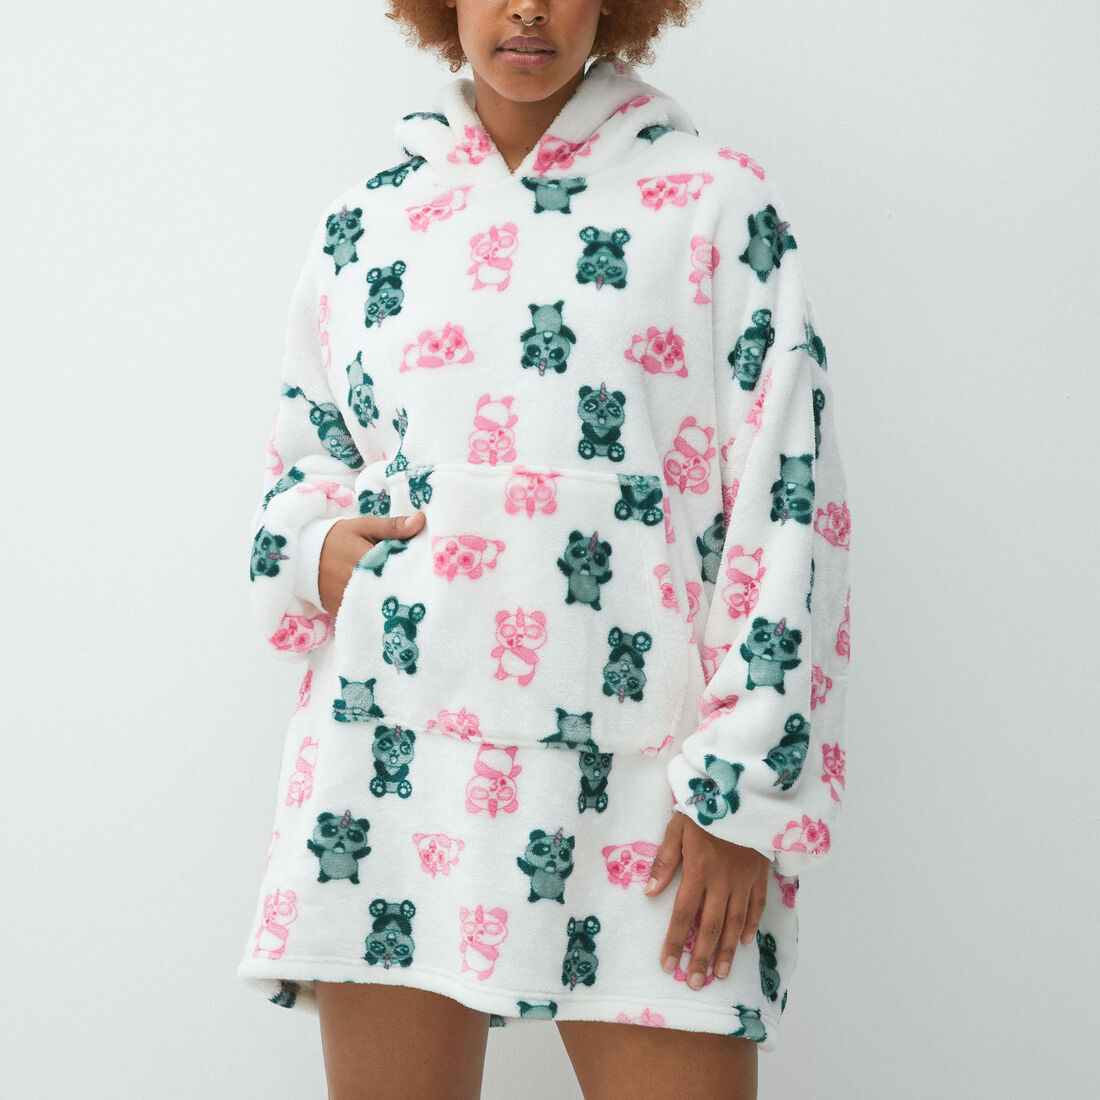 pandicorn plaid fleece jumper with large pocket ;